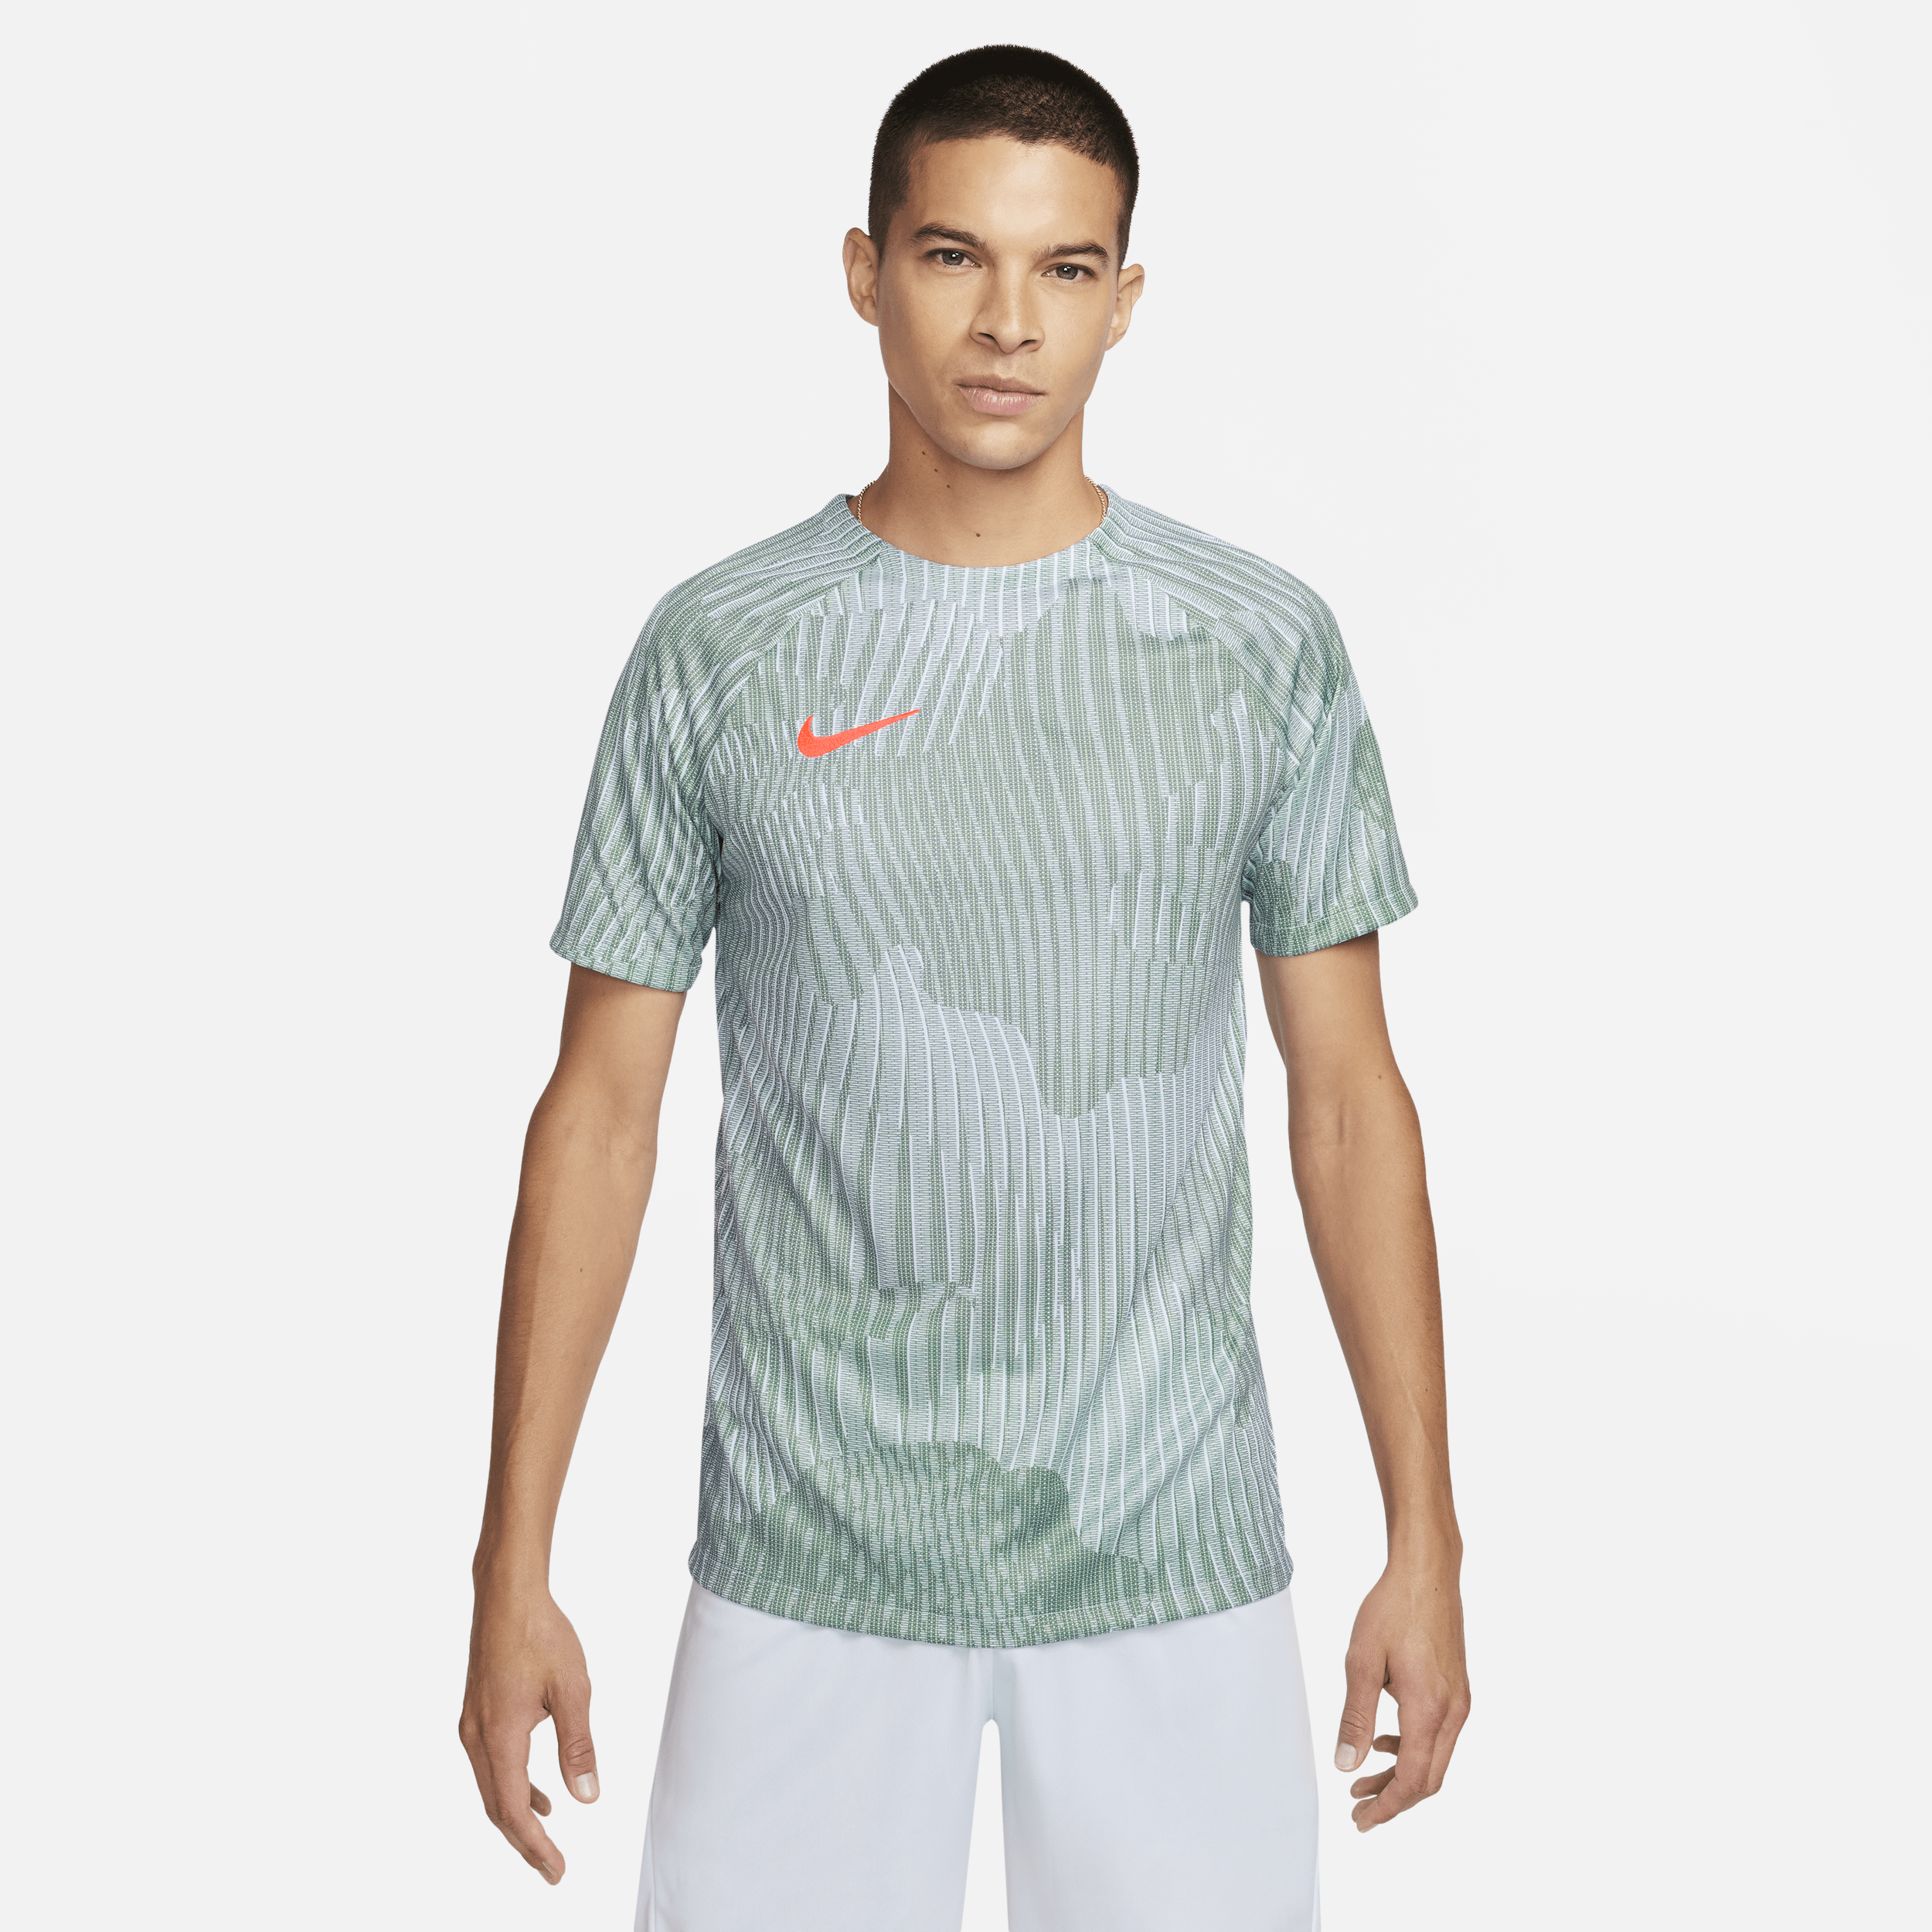 Nike Men's Dri-fit Academy Pro Short-sleeve Soccer Top In White